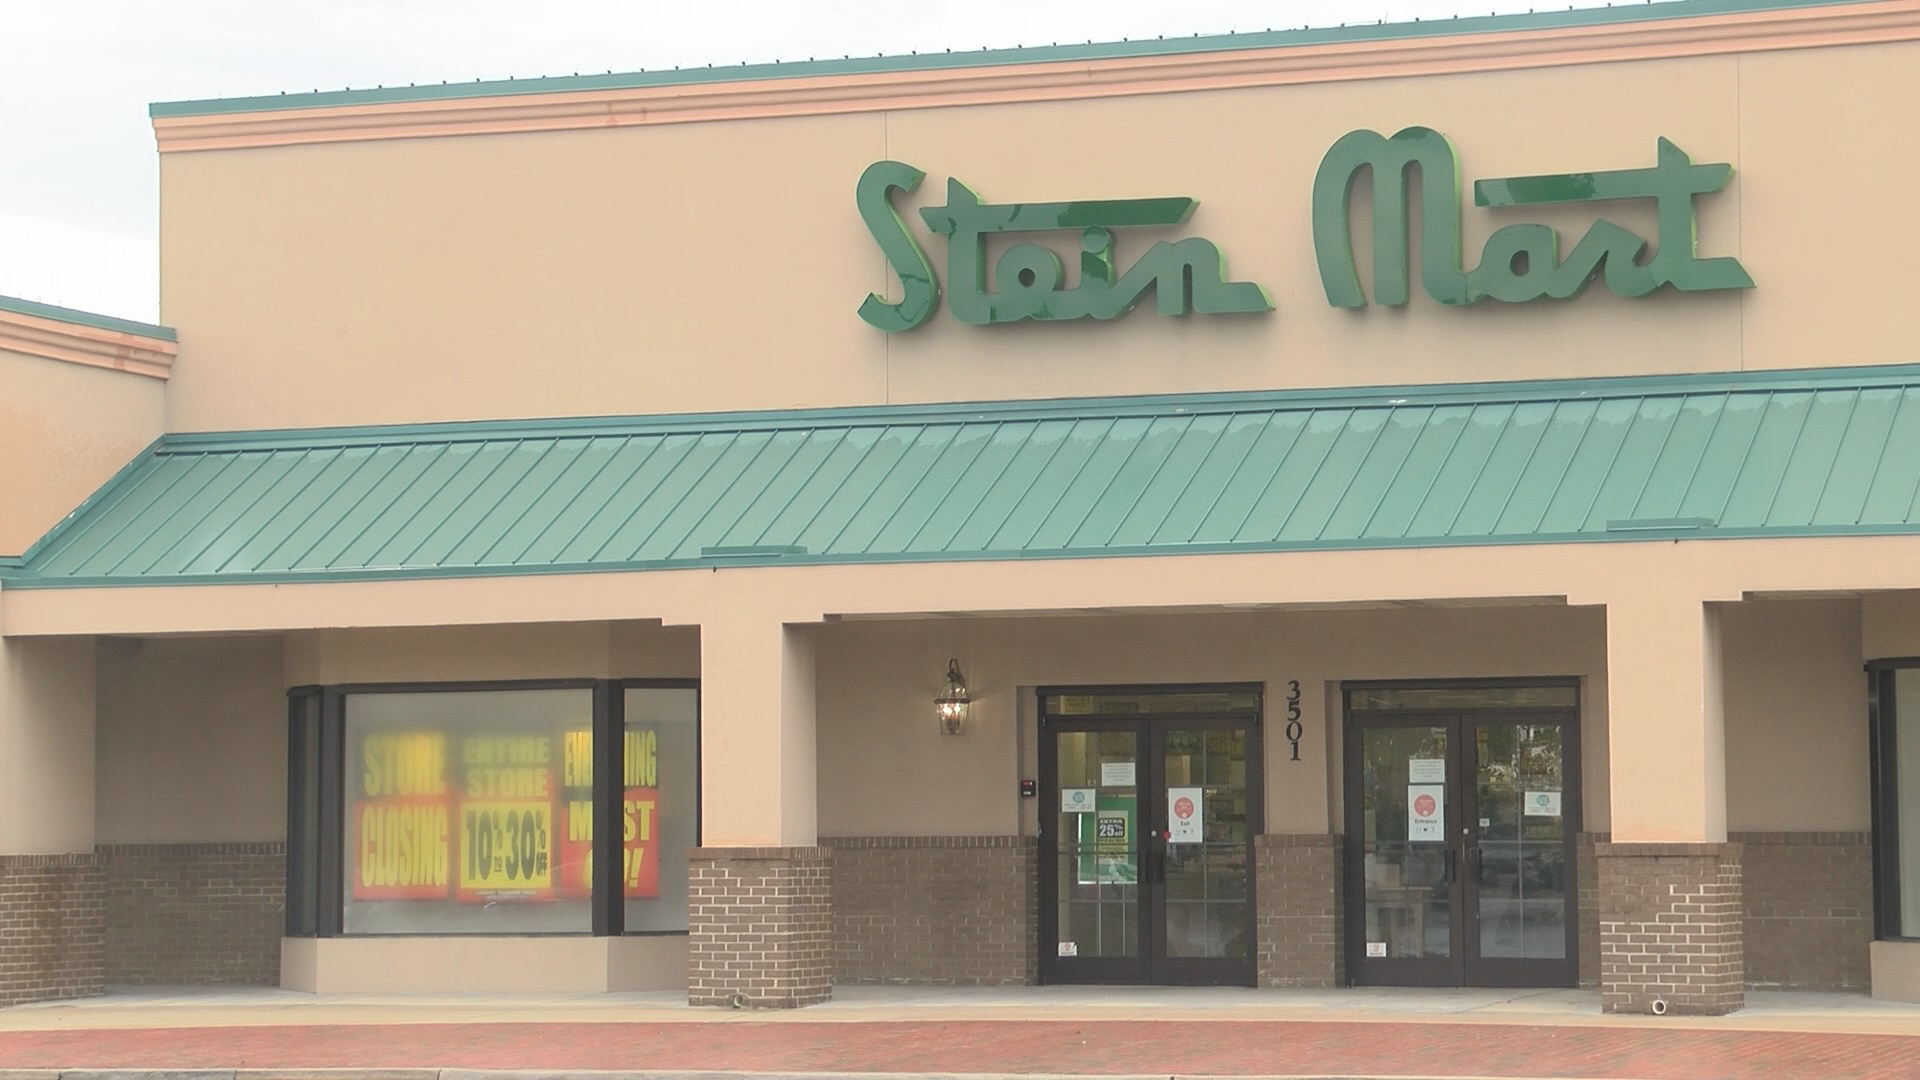 Stein Mart in Wilmington set to close its doors